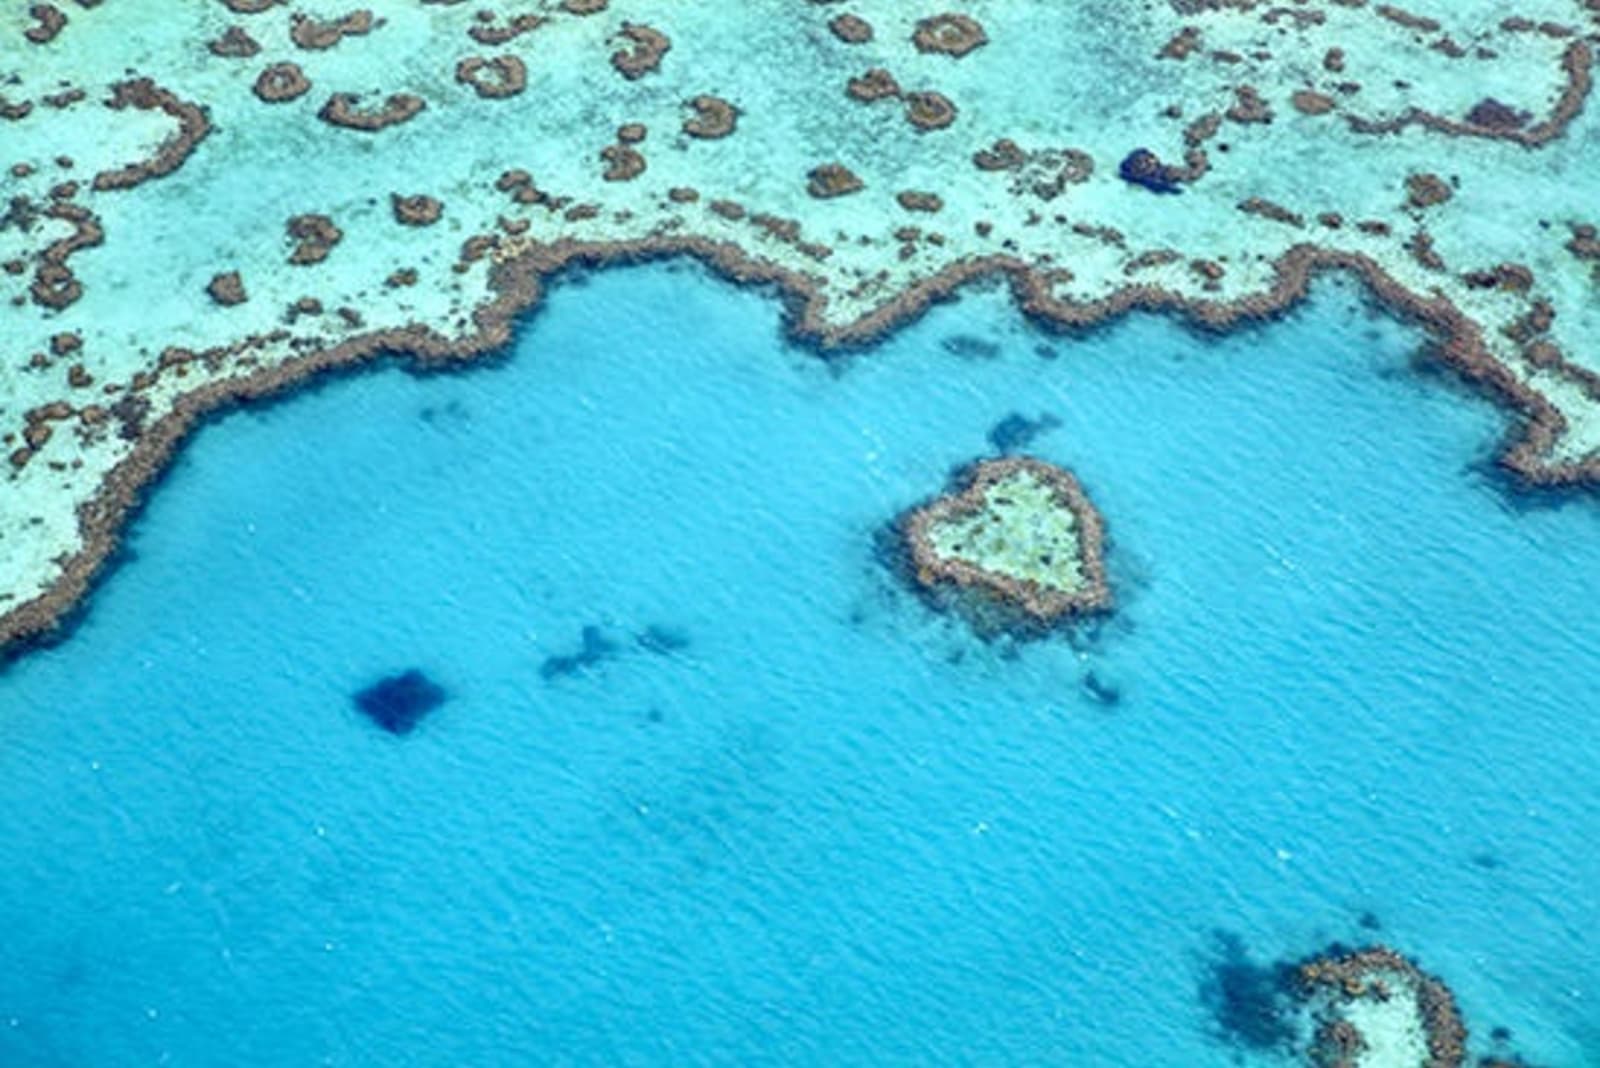 RS-2-Barrier-Reef-Matt-Munro-Lonely-Planet.jpg